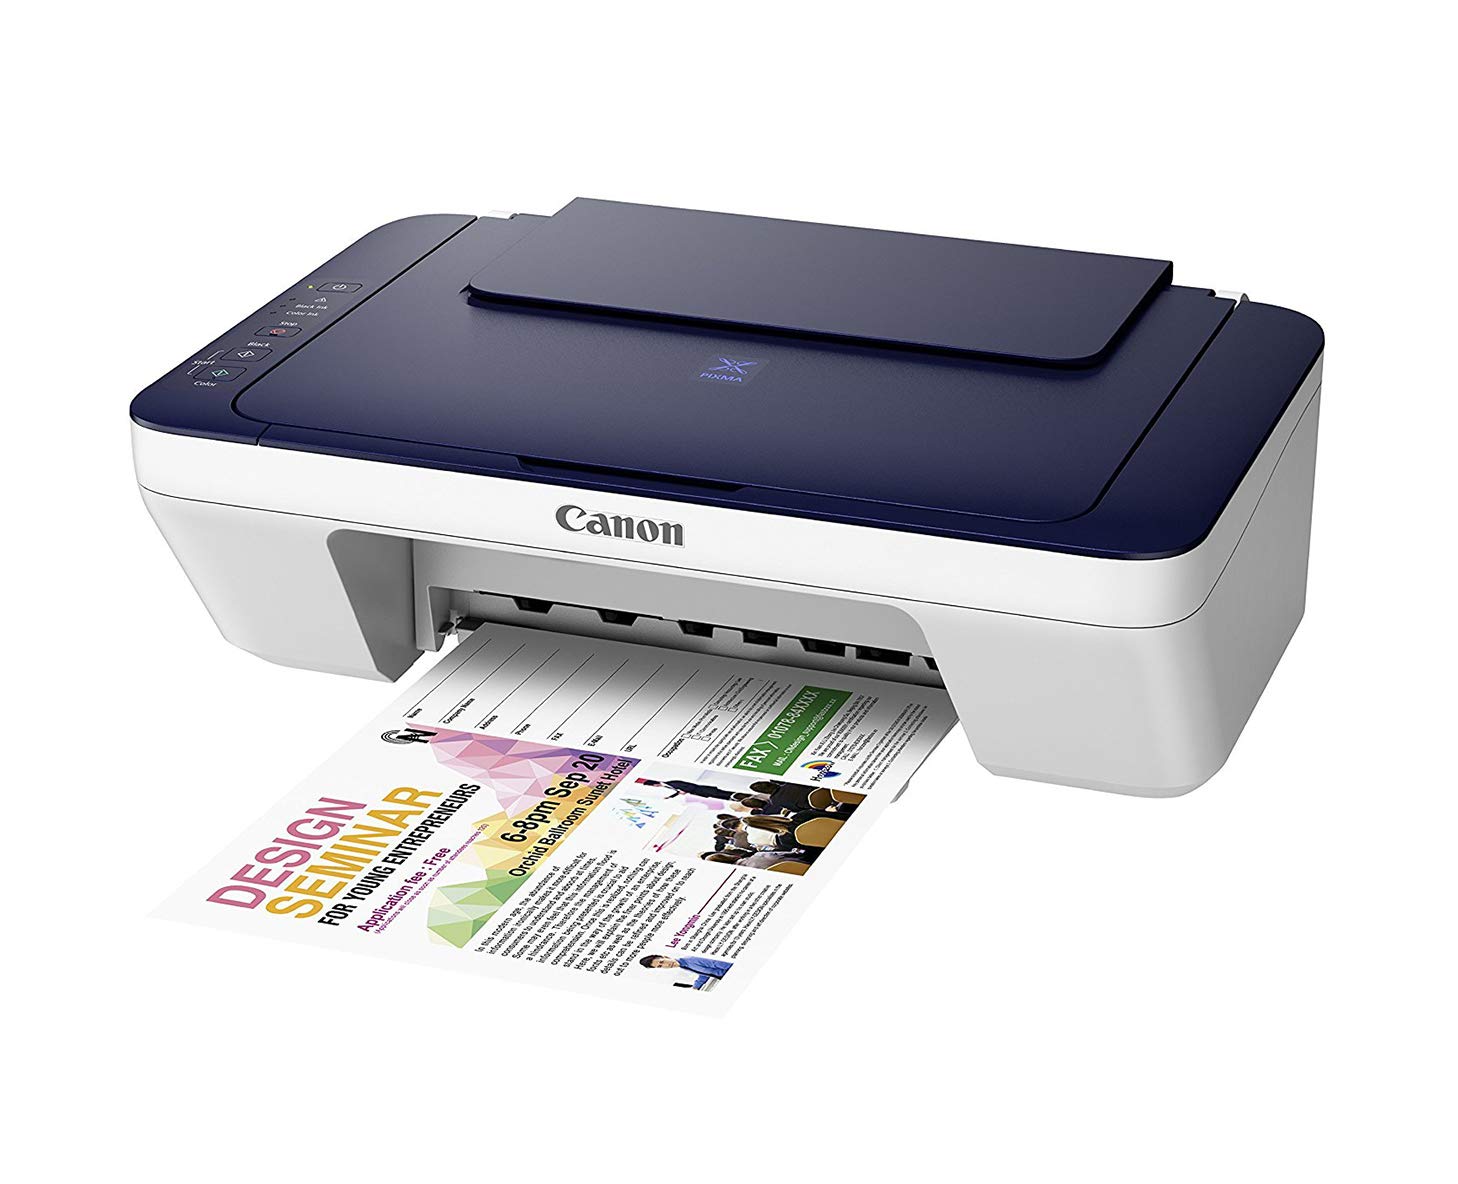 canon printers on amazon deal